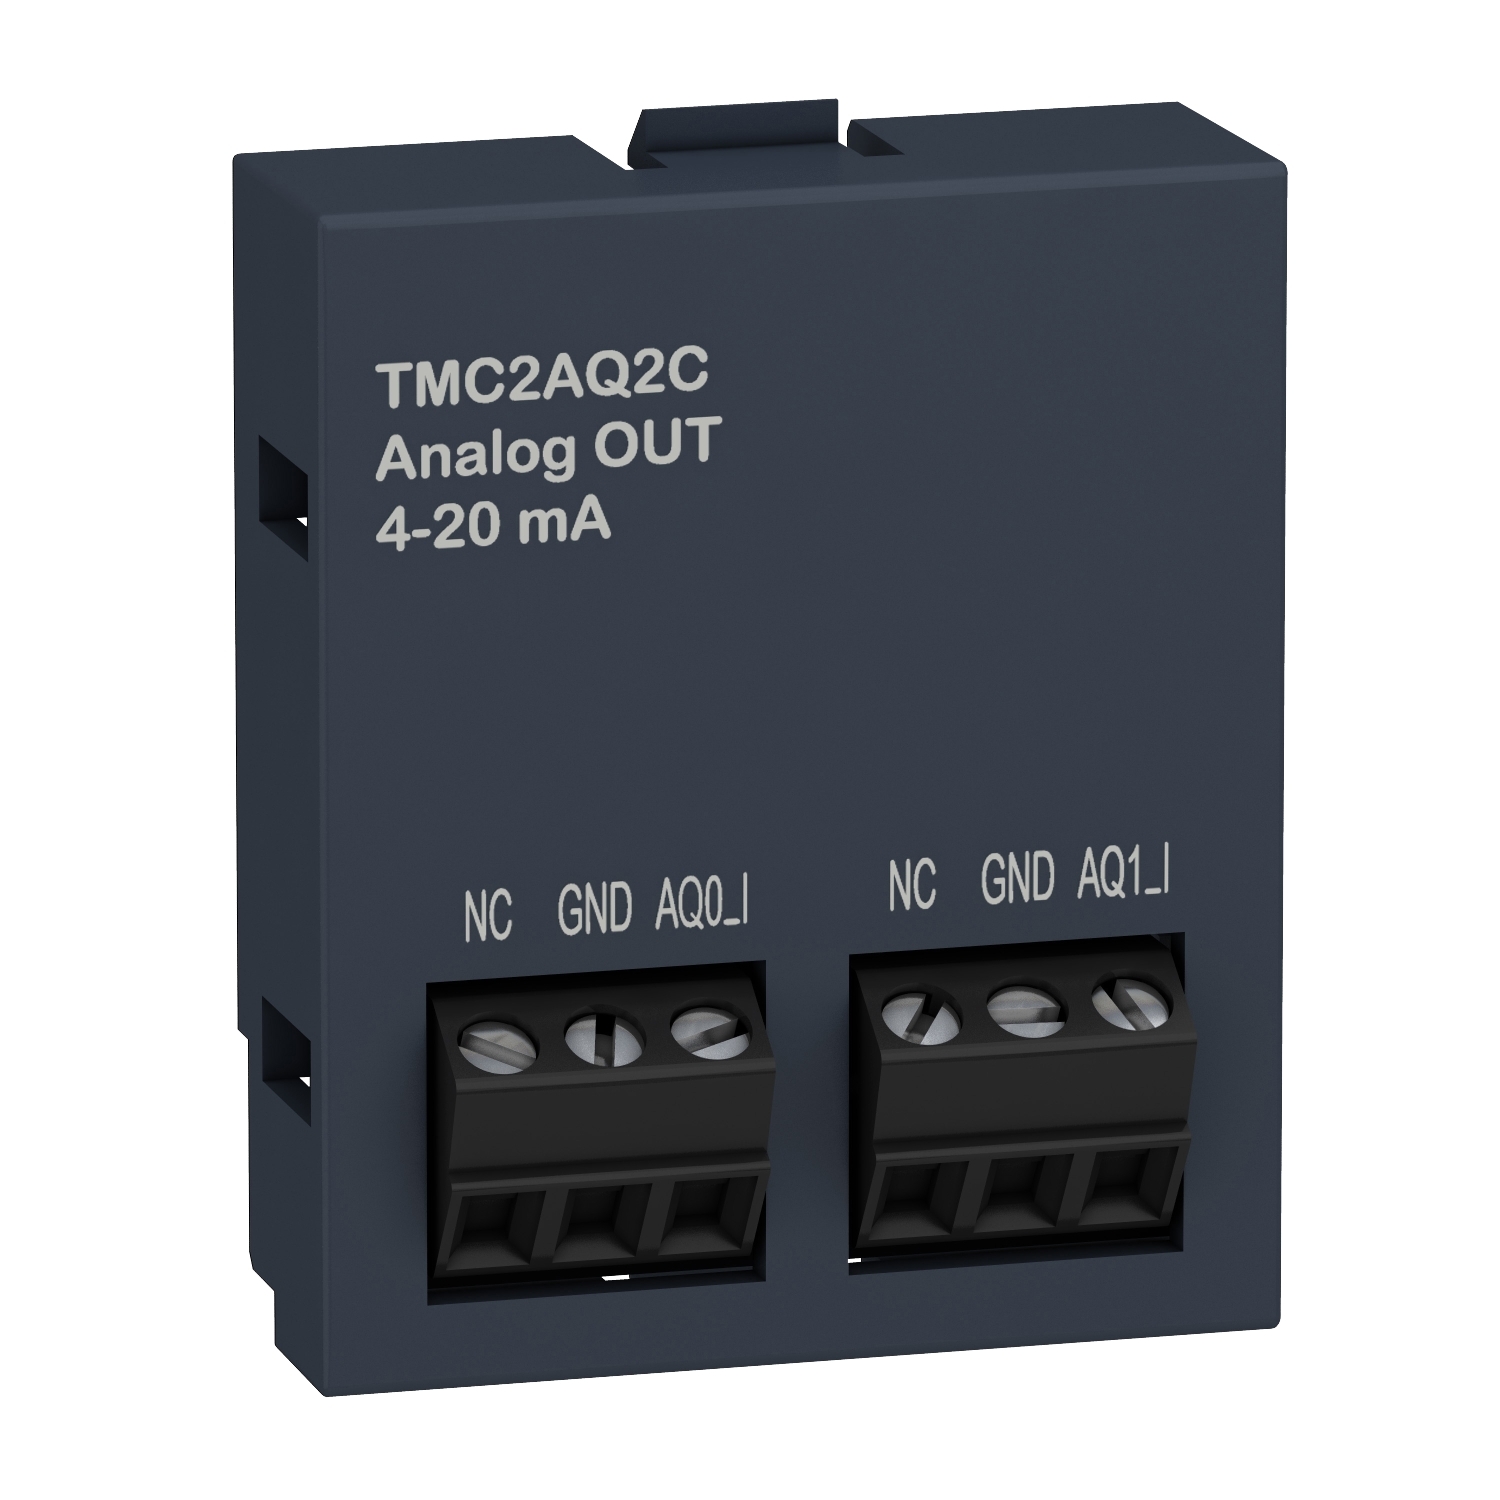 Analogue output cartridge, Modicon M221, 2 analog current outputs, I/O extension